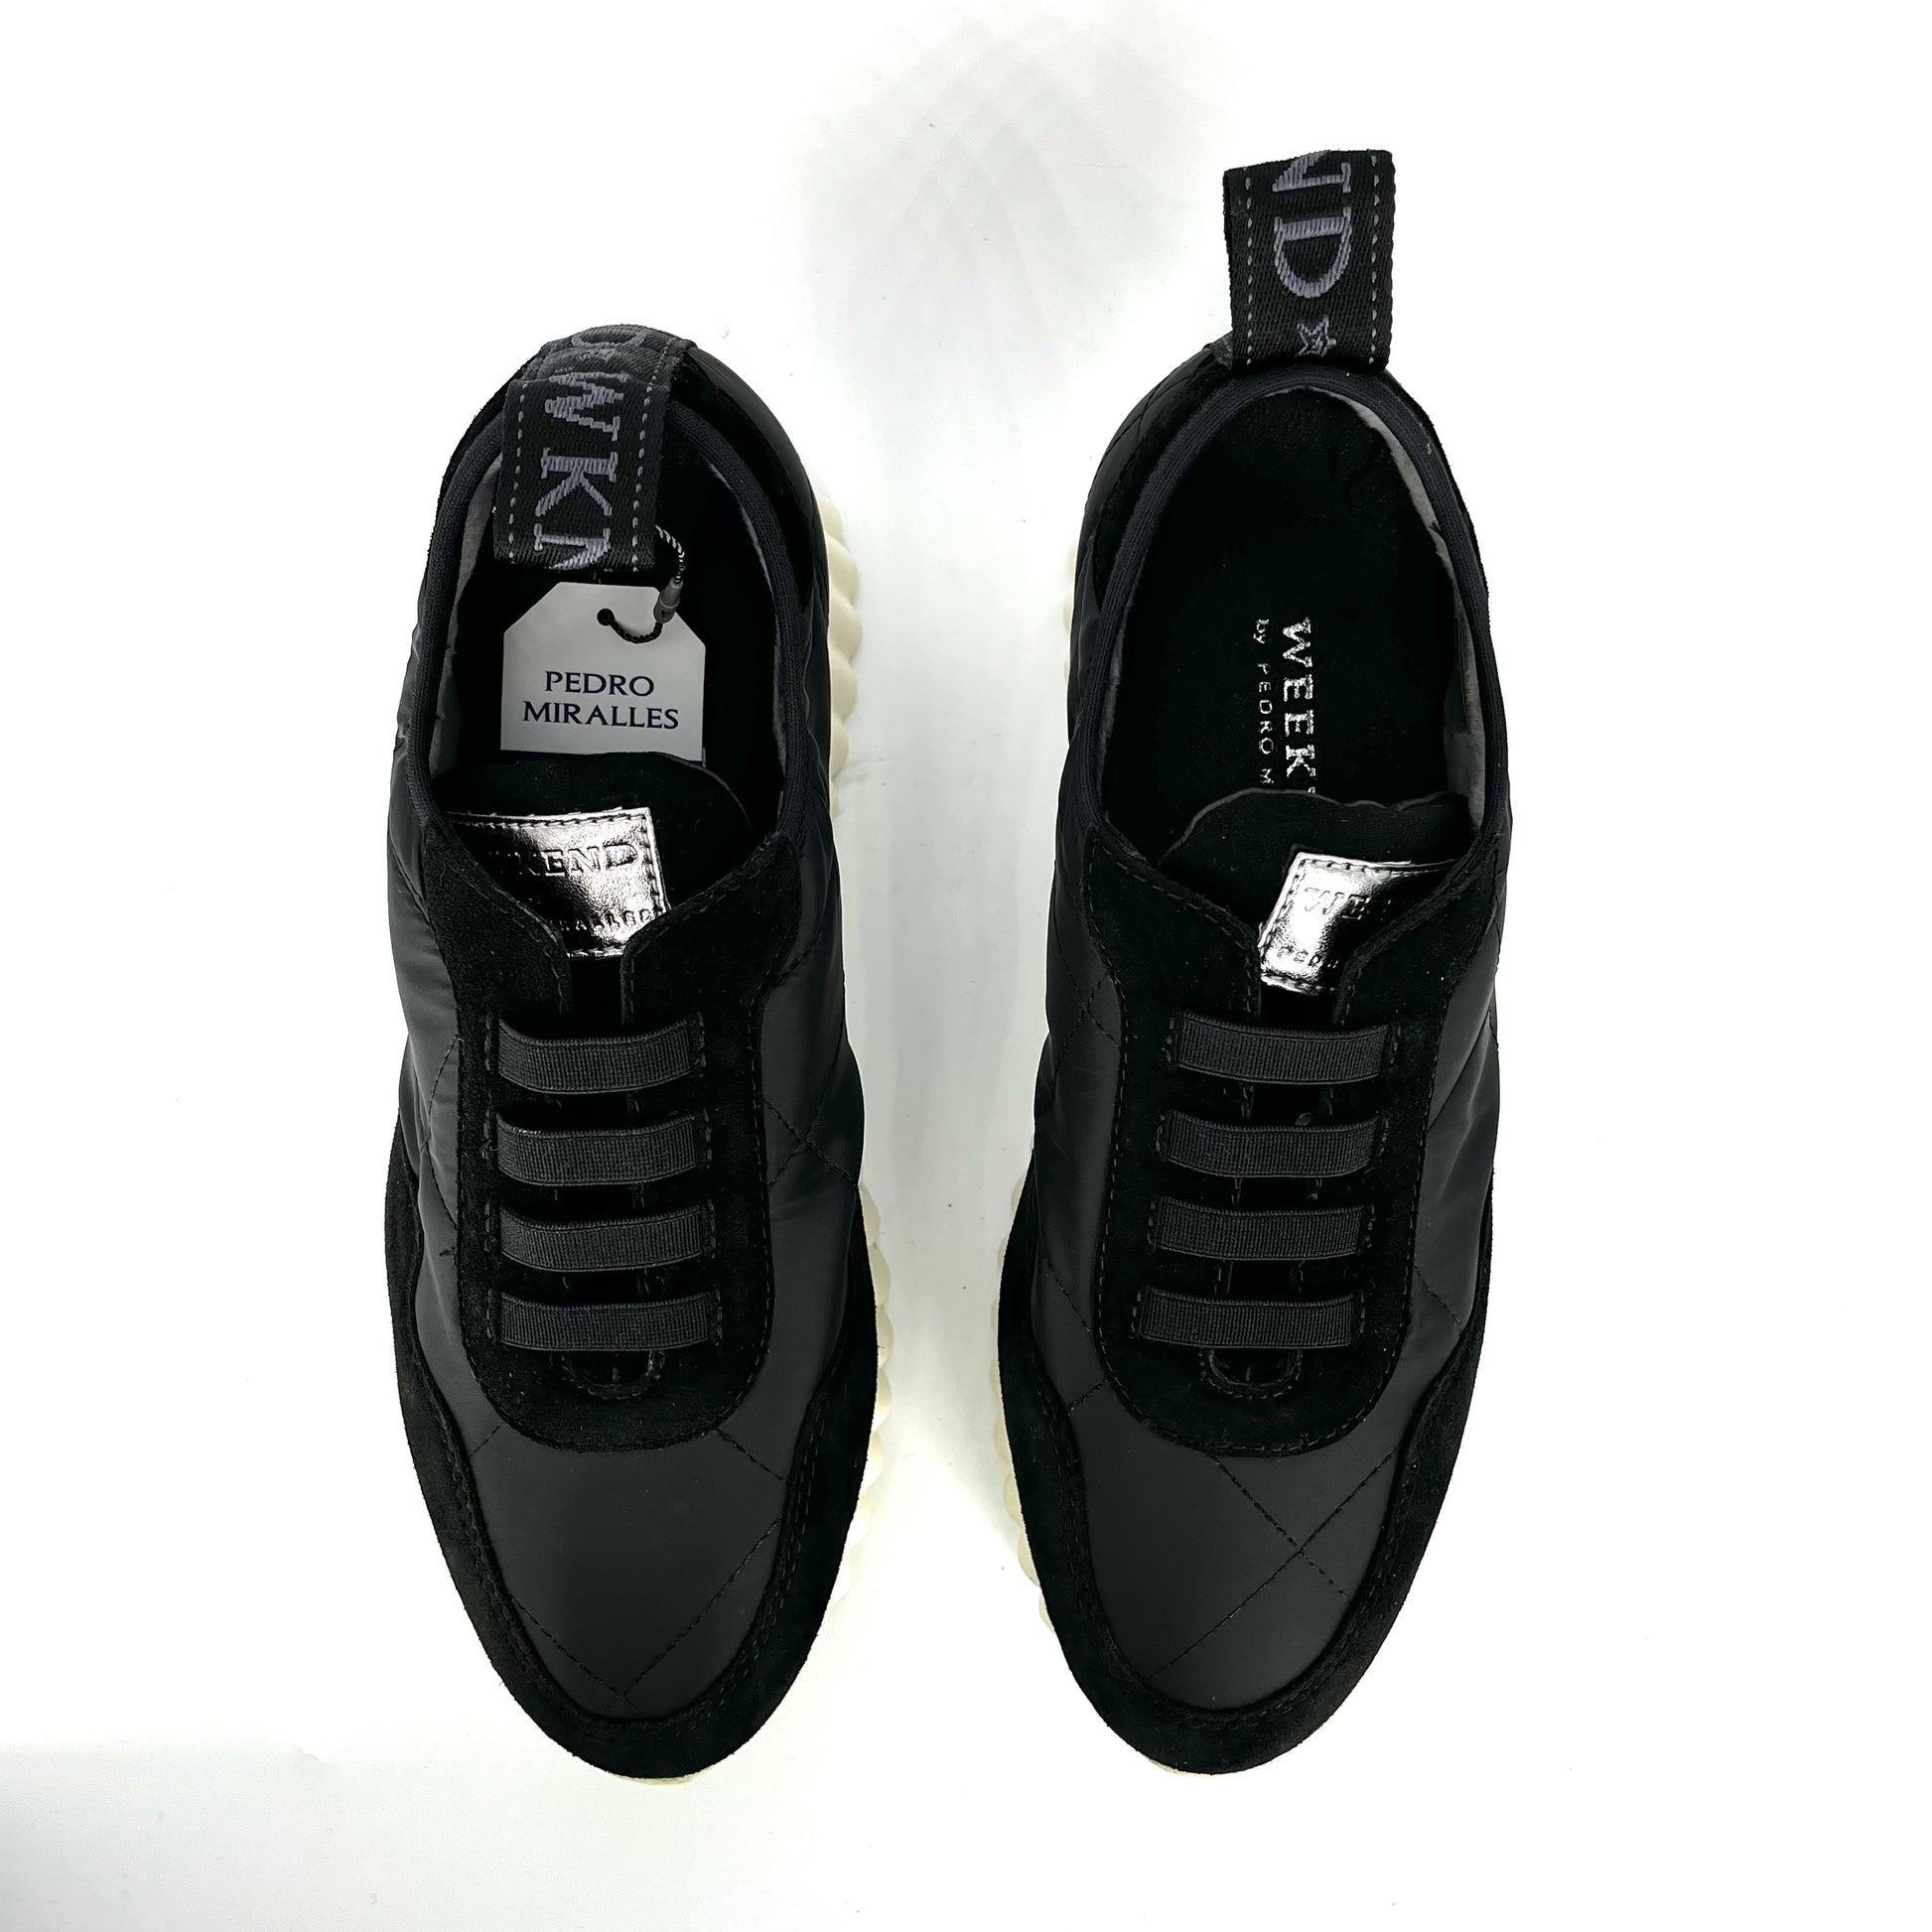 Sneakers De La Marca Pedro Miralles Modelo Freedom Black 22027